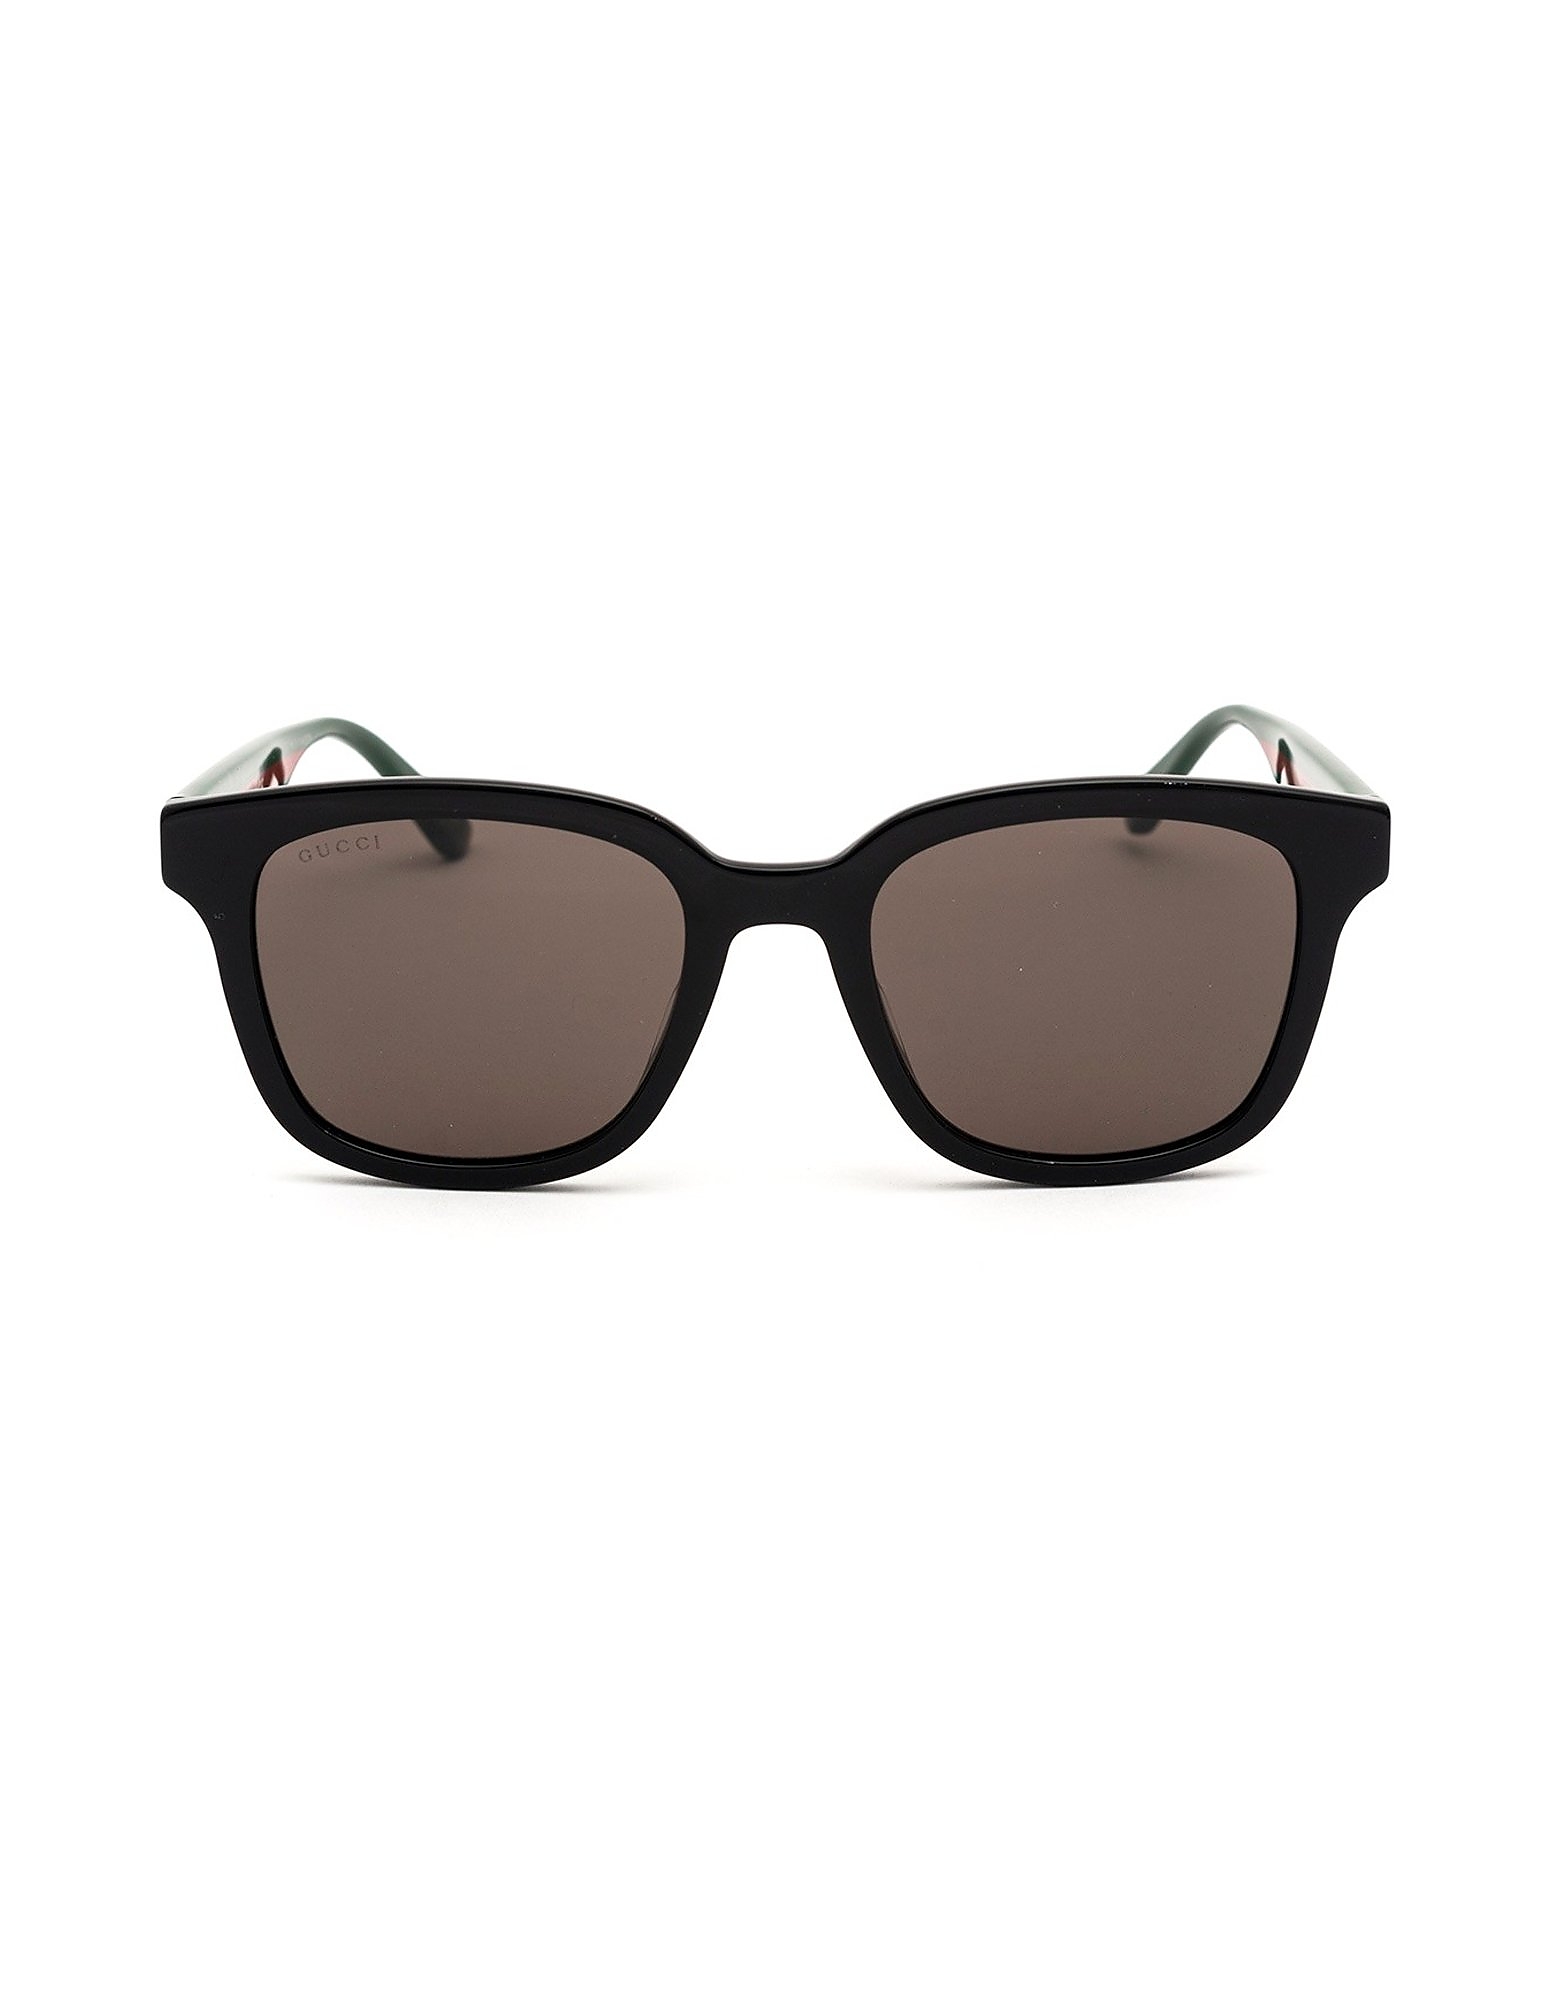 Gucci Sunglasses Black/Web Acetate Square Frame Men's Sunglasses